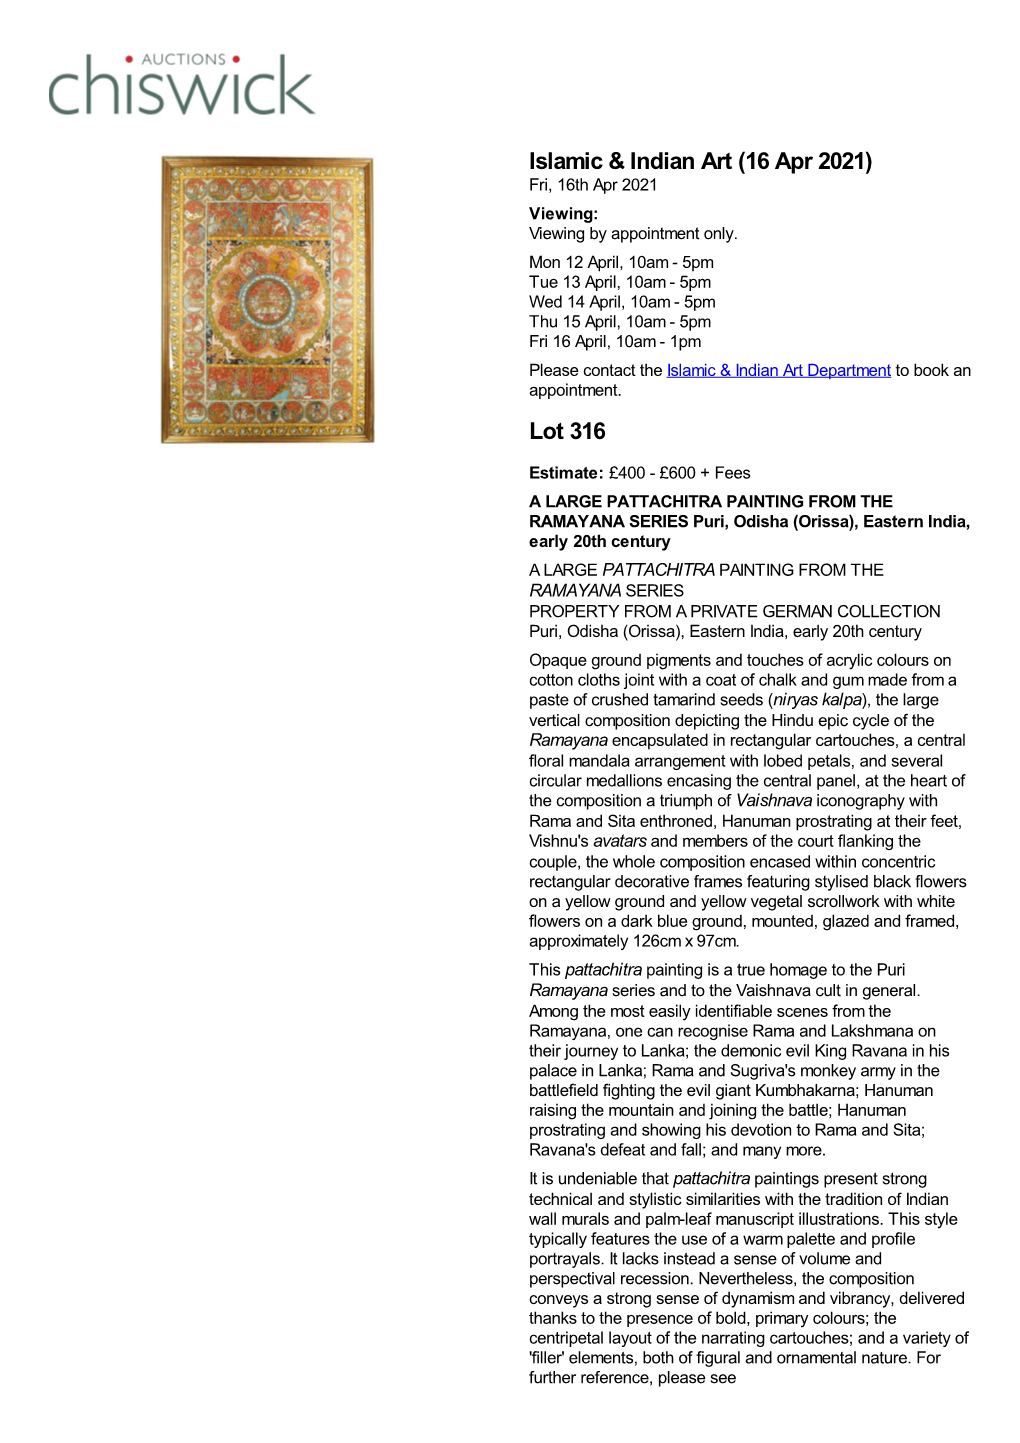 Islamic & Indian Art (16 Apr 2021) Lot